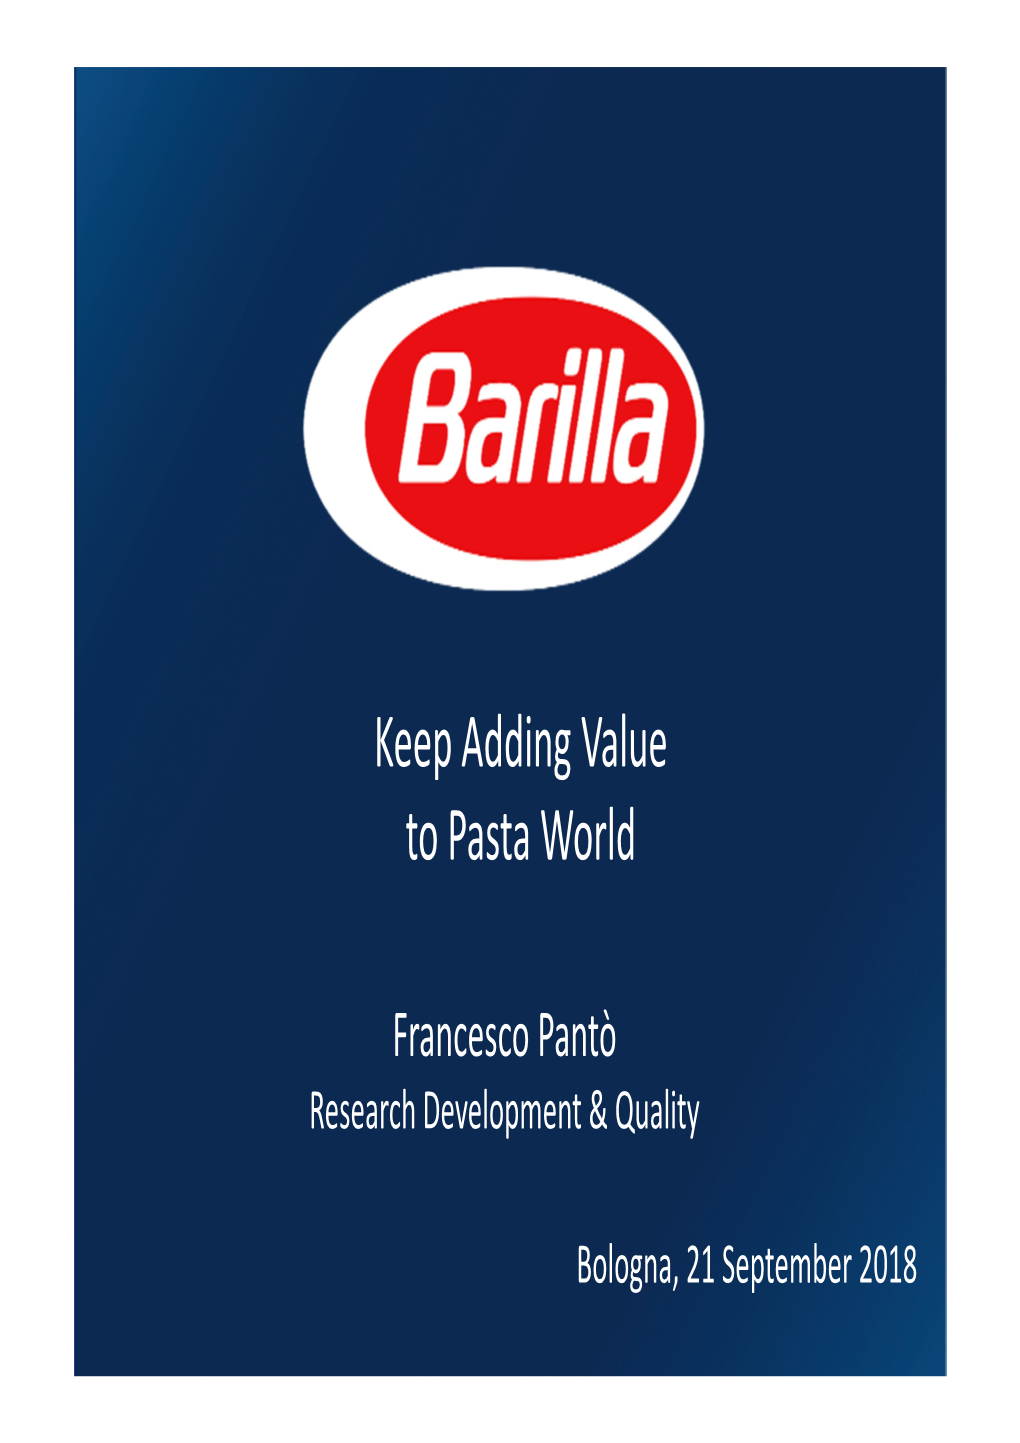 Keep Adding Value to Pasta World